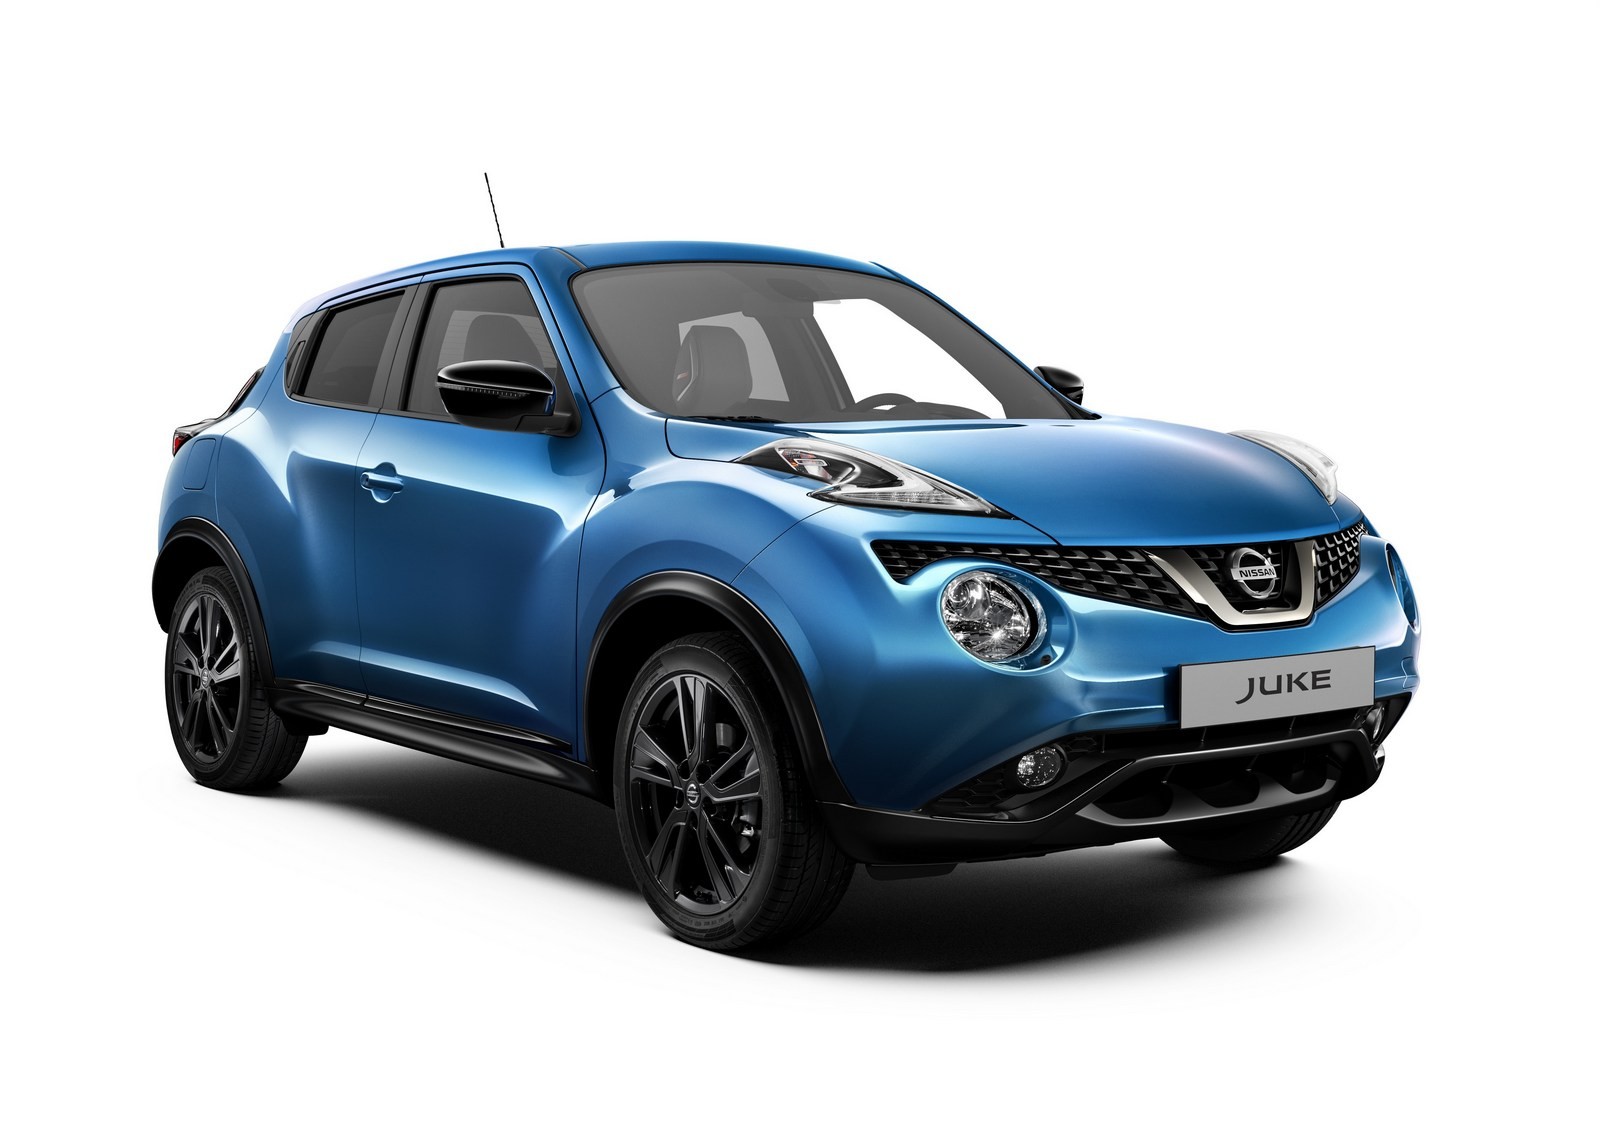 Nissan Juke - Small Crossover Market Guide Part 3